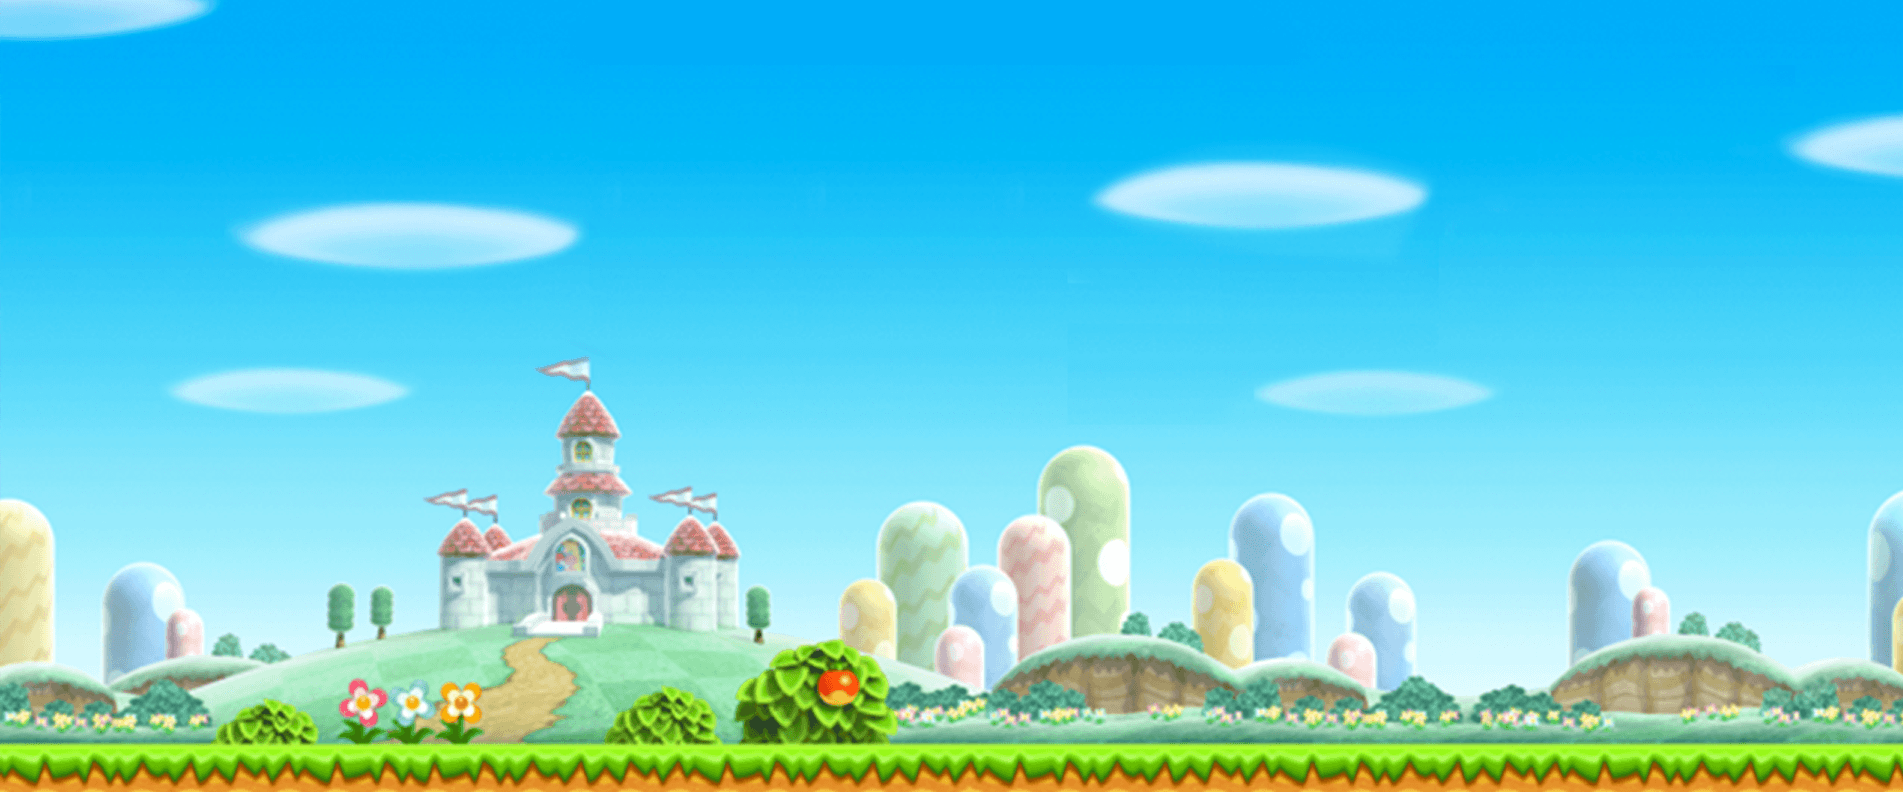 Super Mario Bros Castle Background